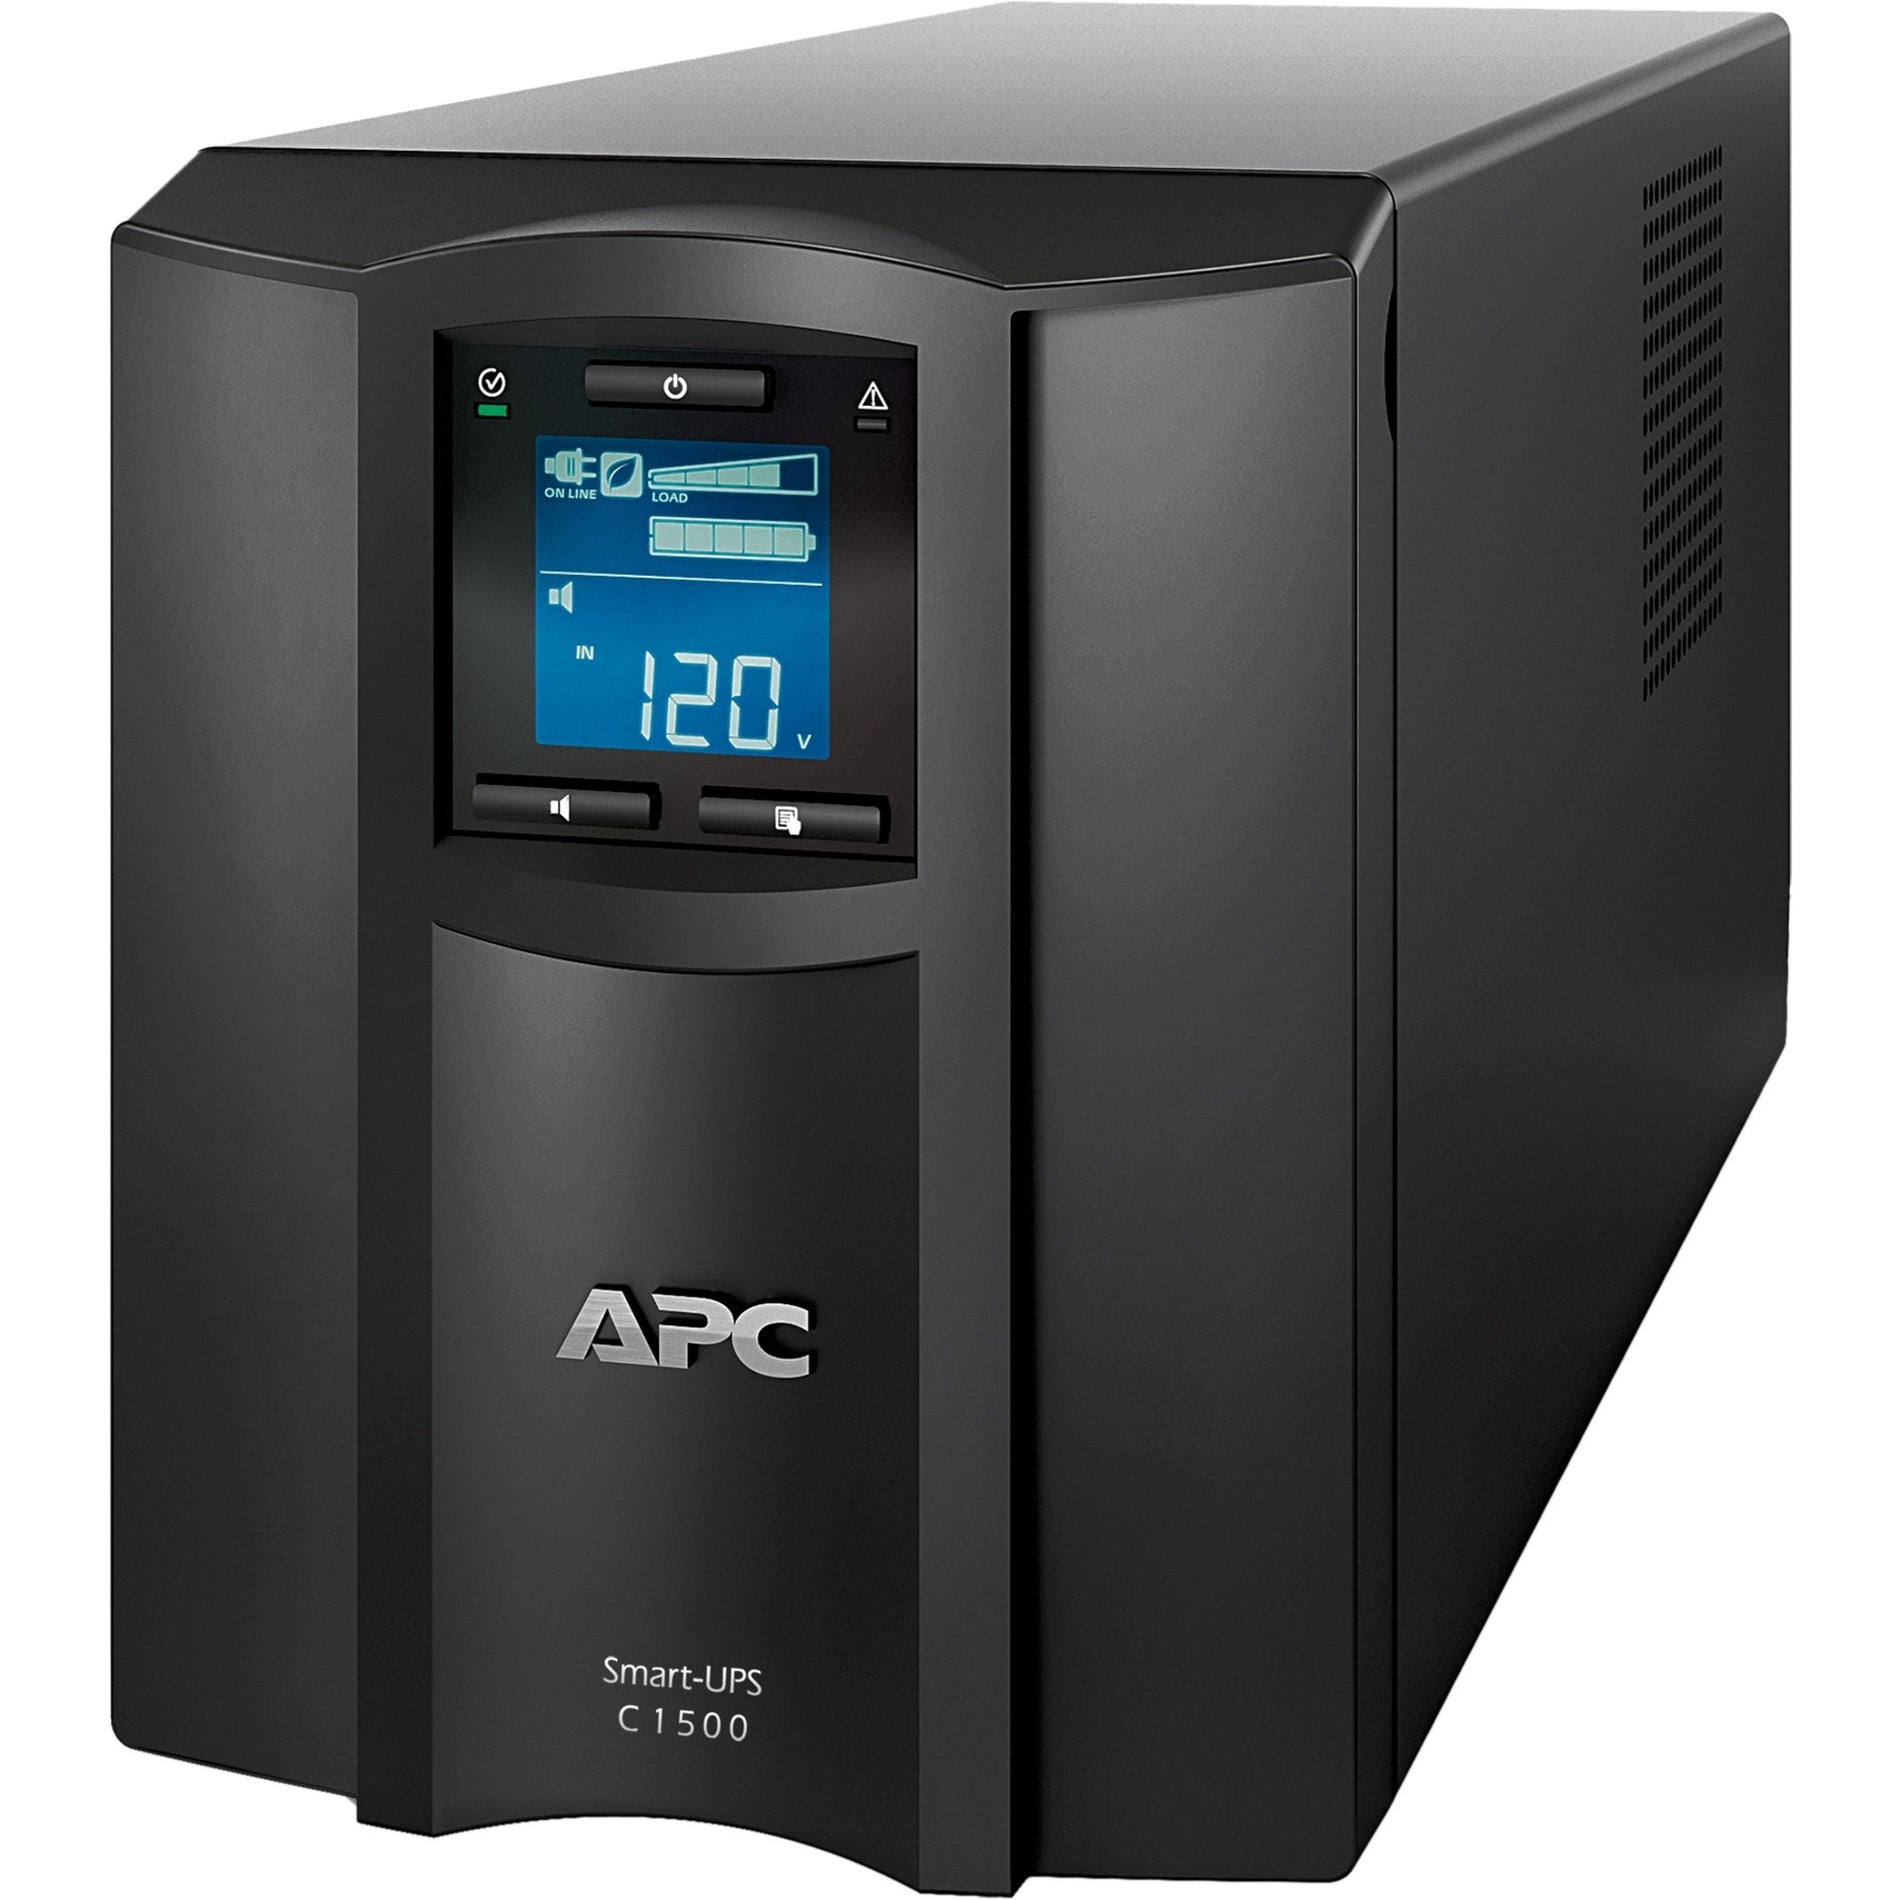 APC SMC1500C Smart-UPS 1500VA Desktop UPS, Energy Star, 2 Year Warranty